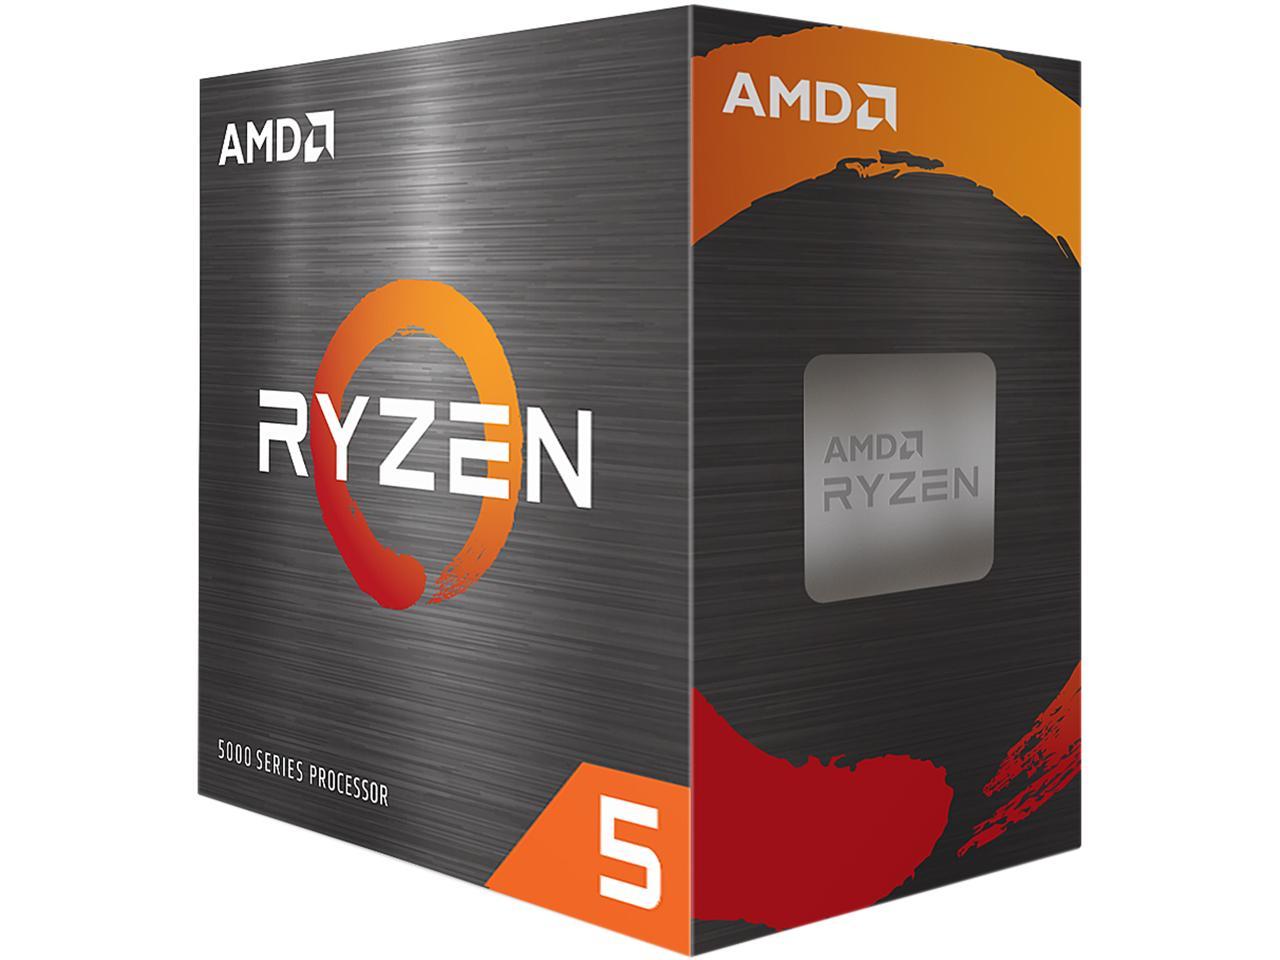 AMD Ryzen 5 5600X 3.7GHz 6-Core AM4 Processor @Newegg $268